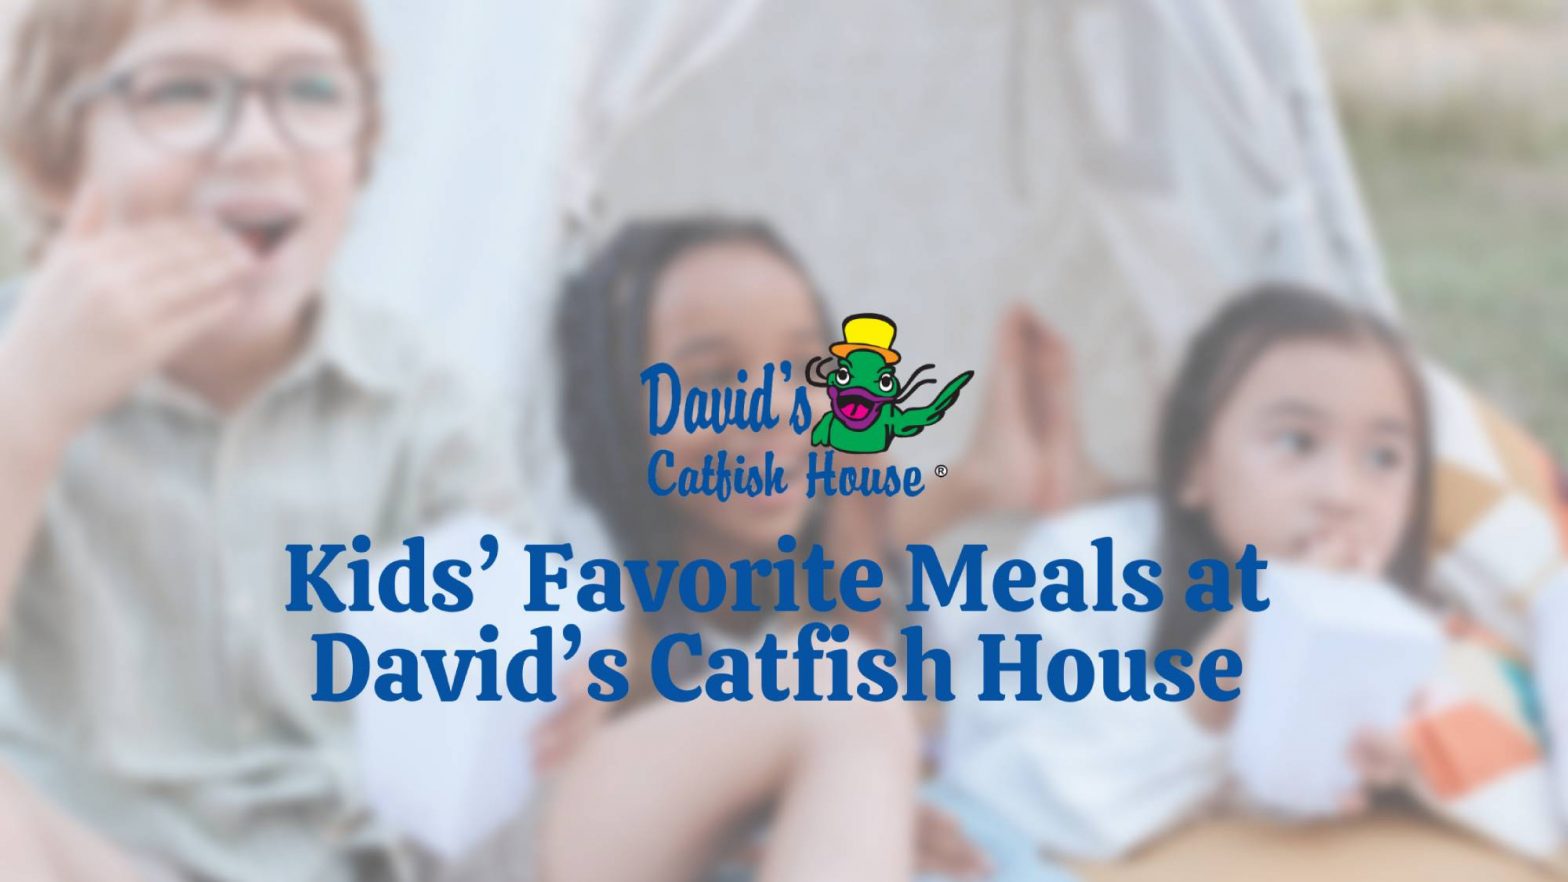 Kids’ Favorite Meals at David’s Catfish House